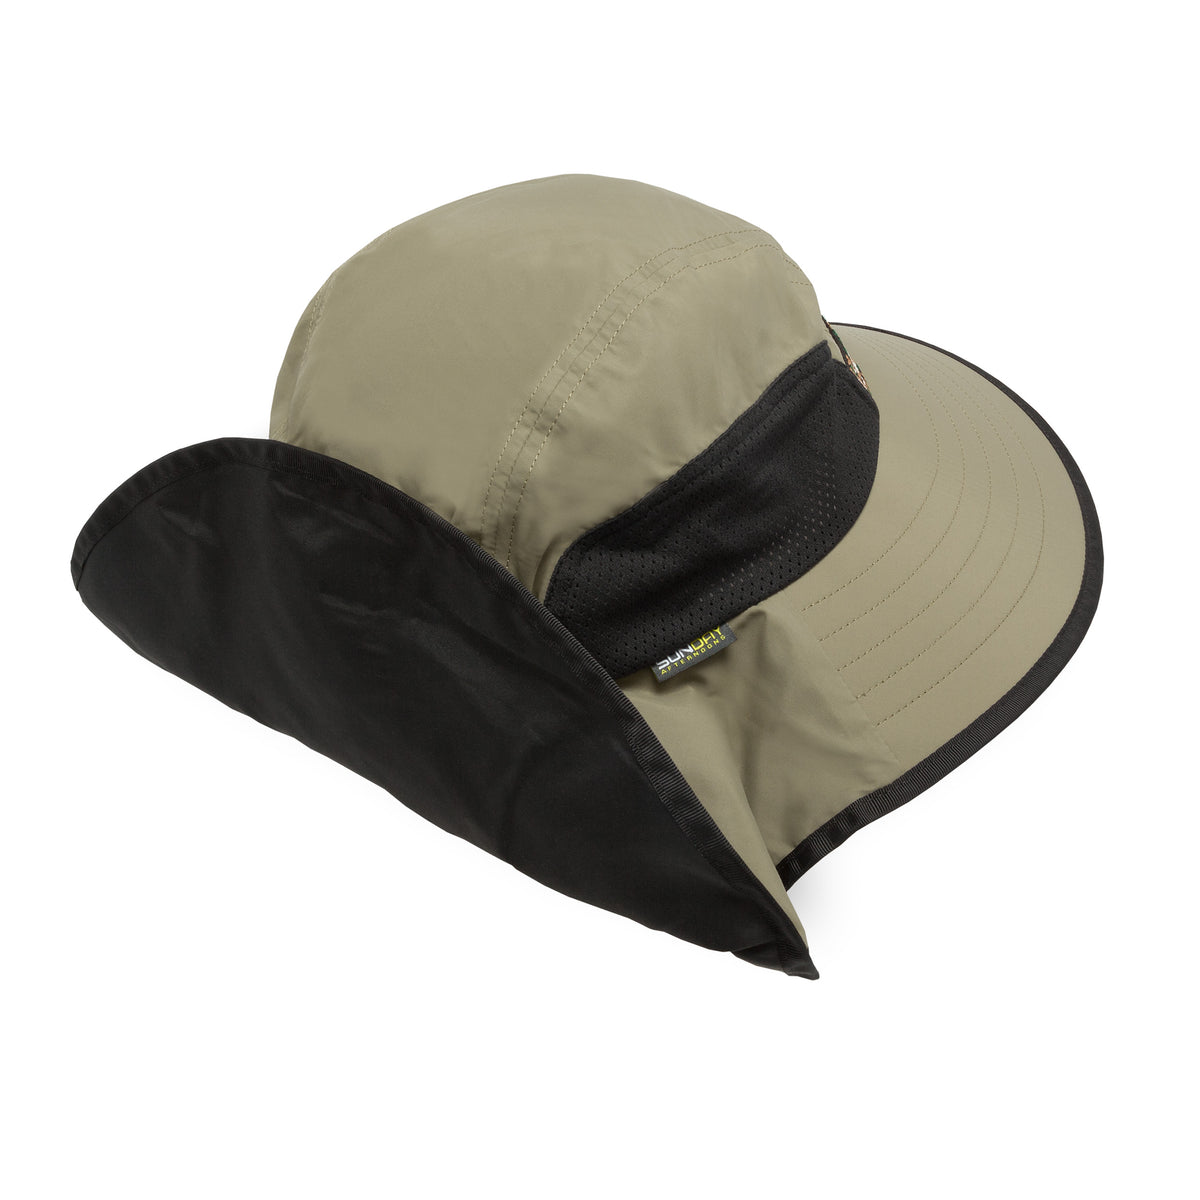 Florida XL-Brim Sun Hat, Discounted Sun Hats for Men